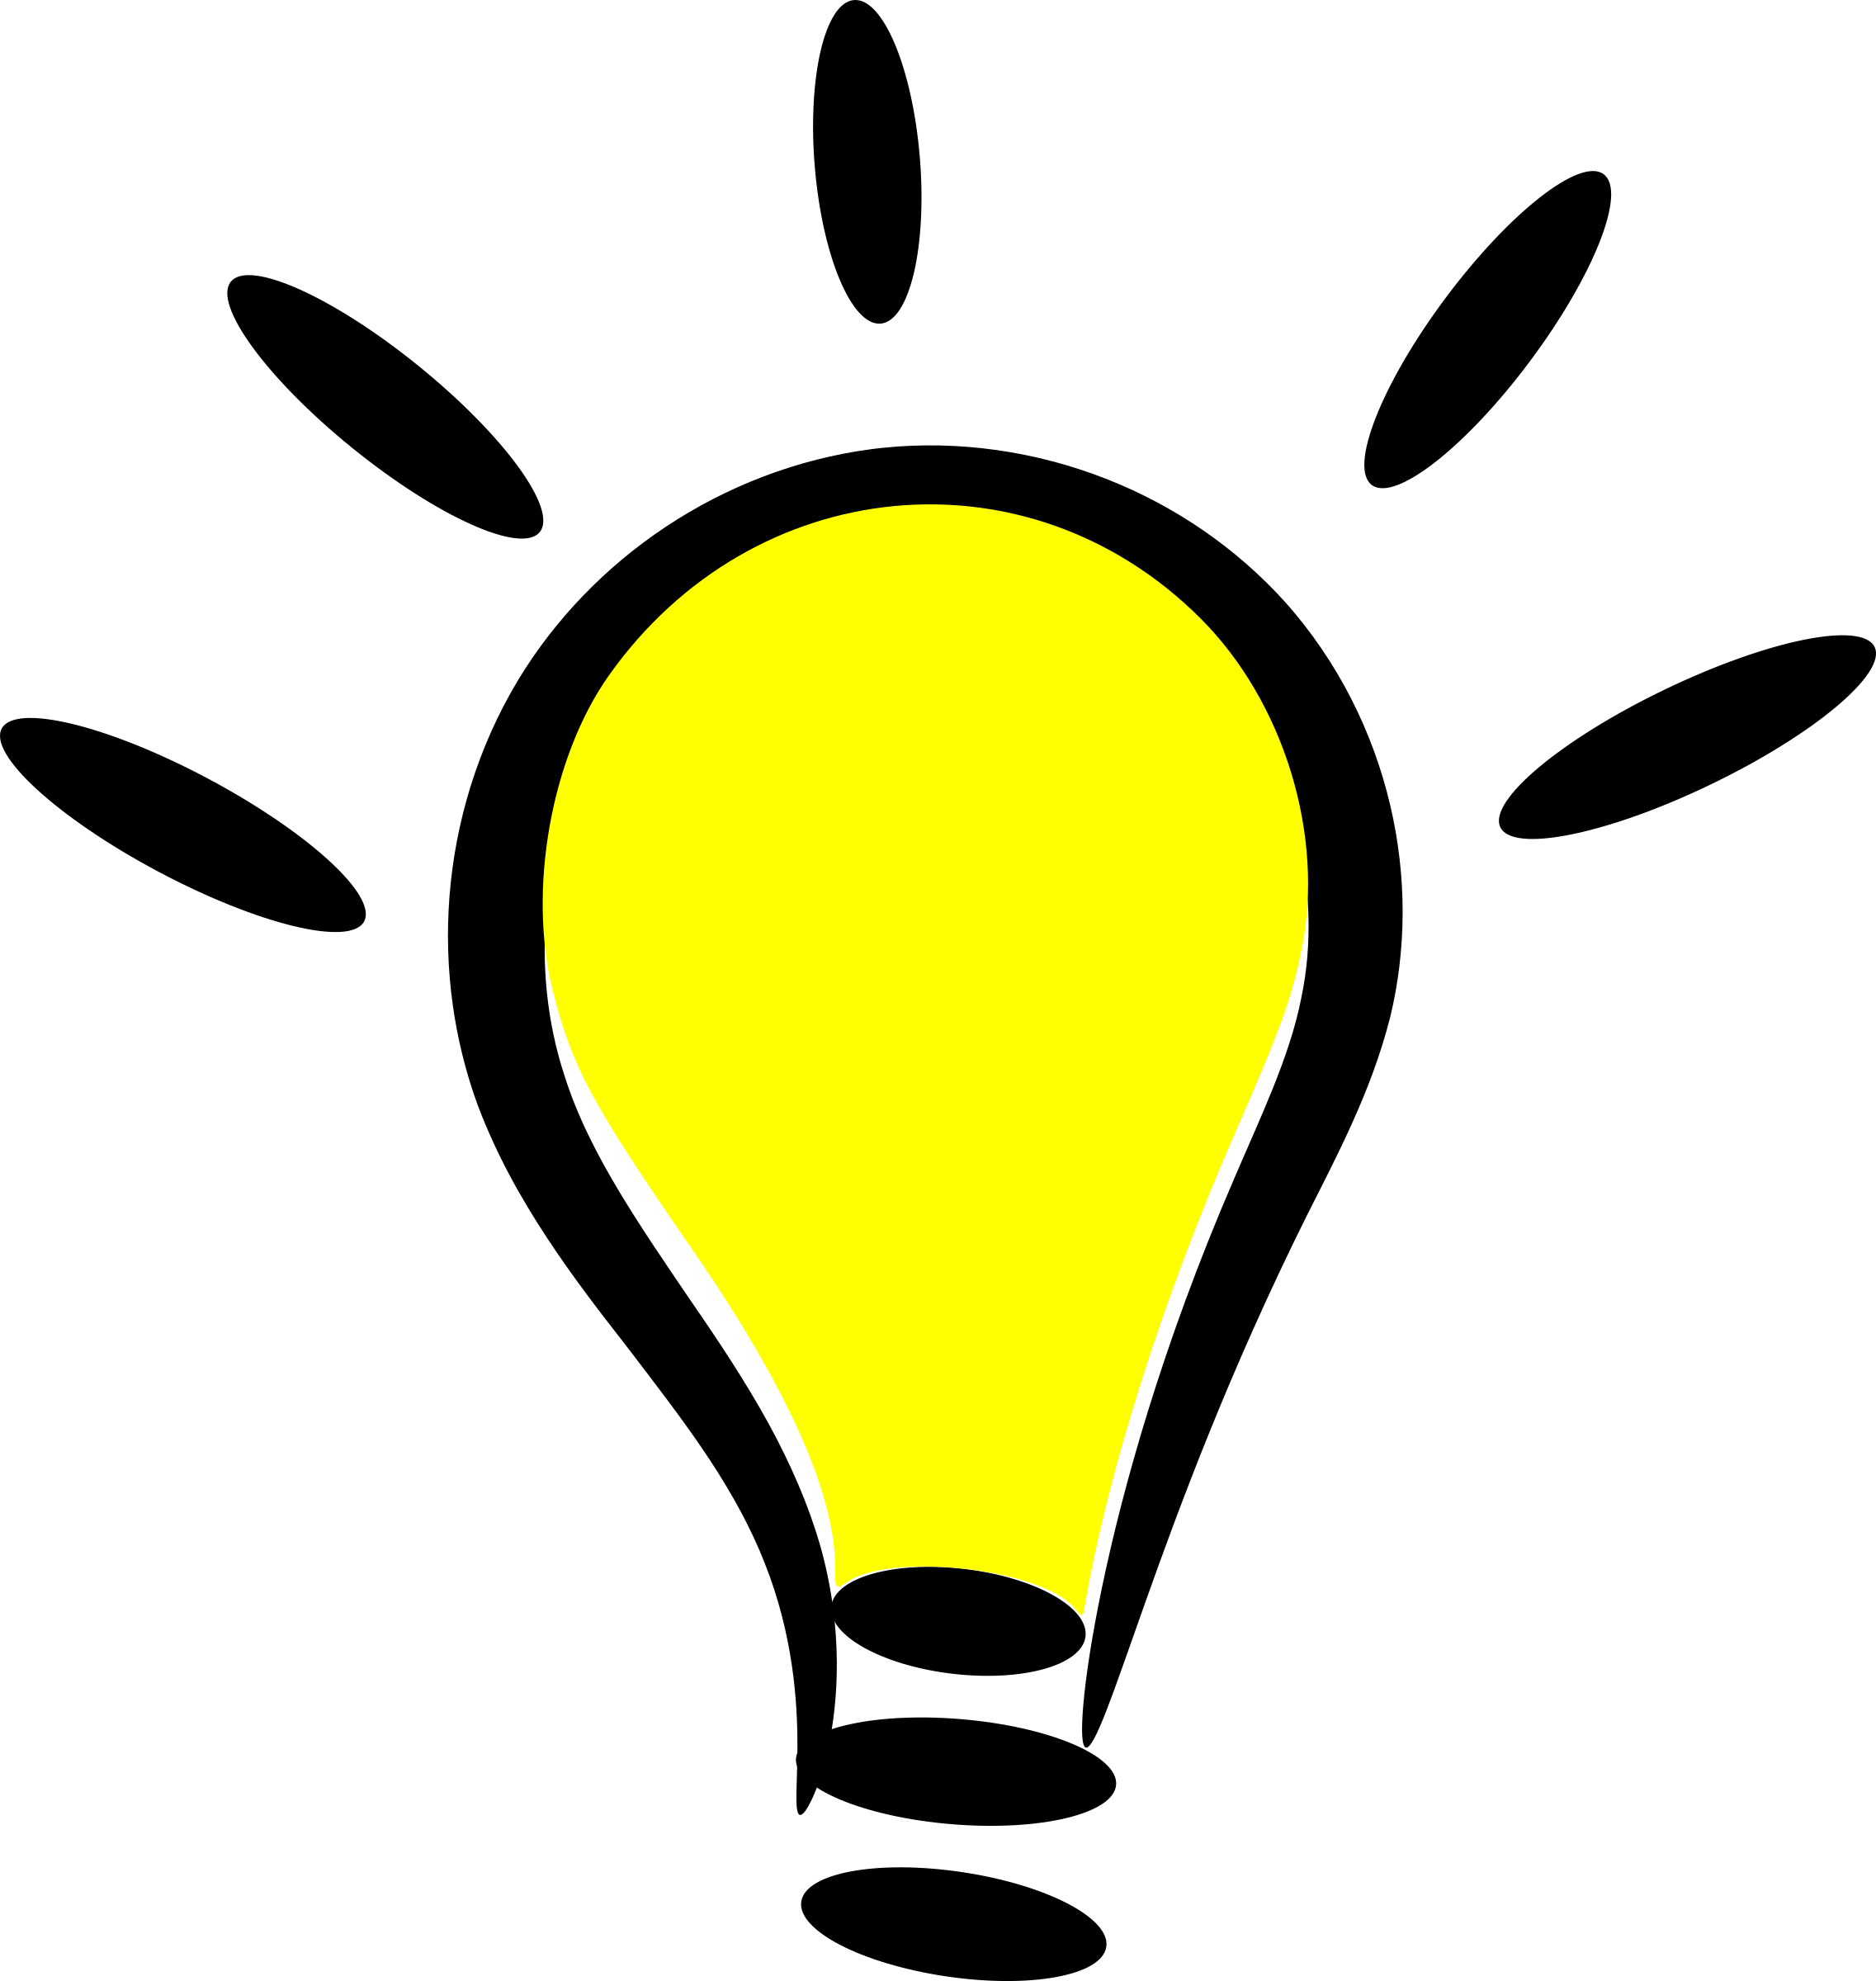 Free Light Bulb Clipart Transparent, Download Free Light Bulb Clipart ...